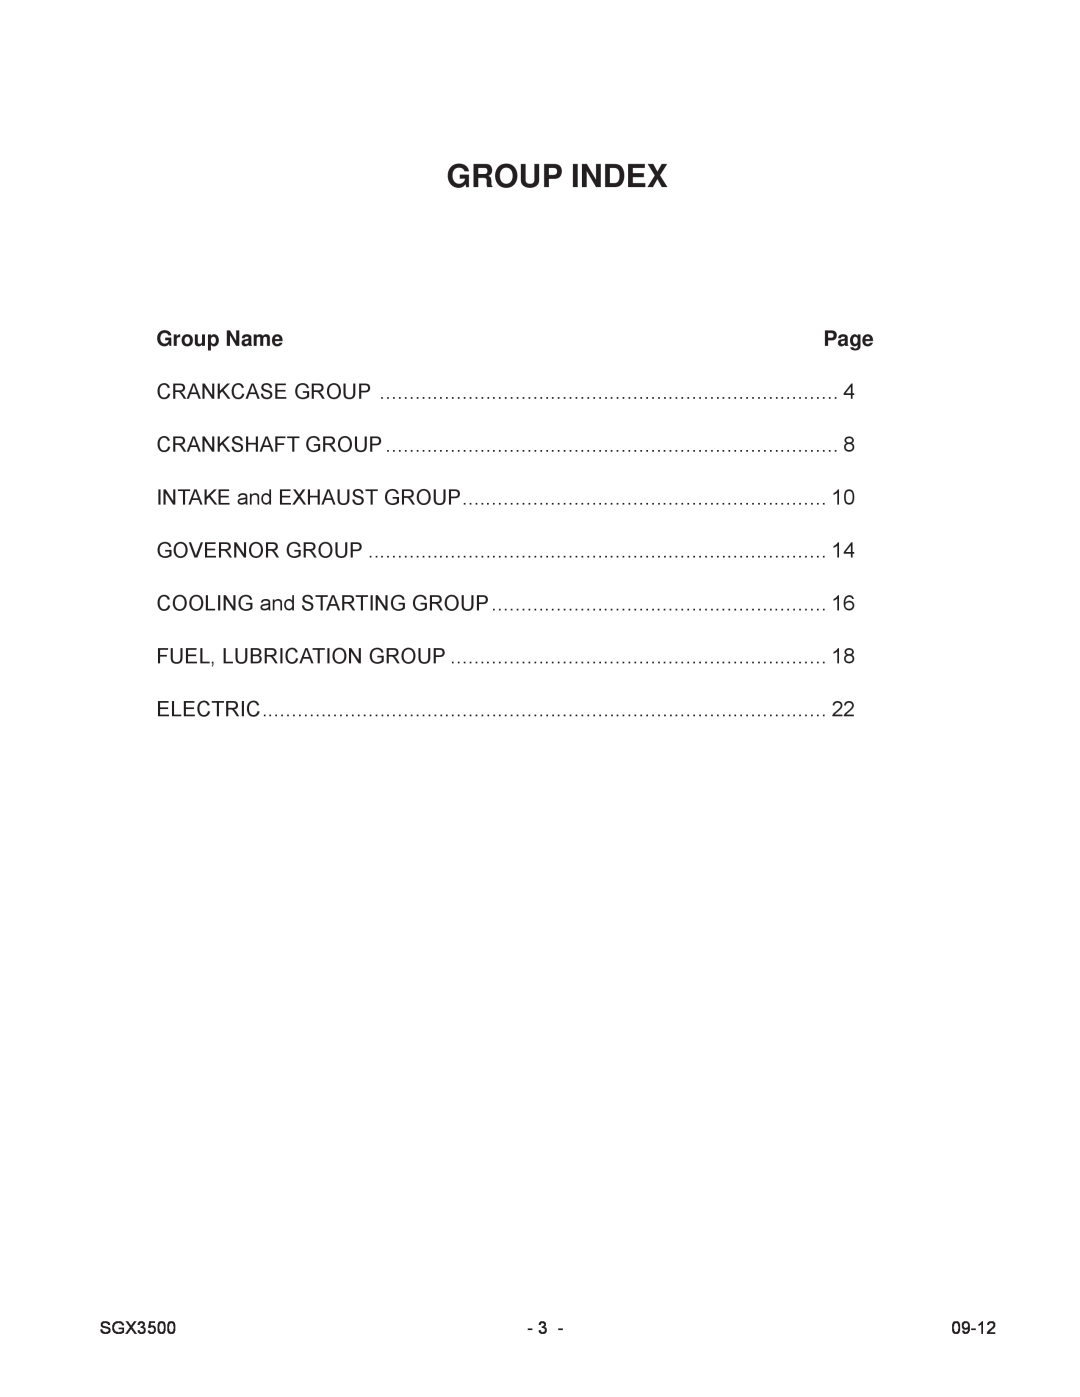 Subaru SGX3500 manual Group Index, Group Name 